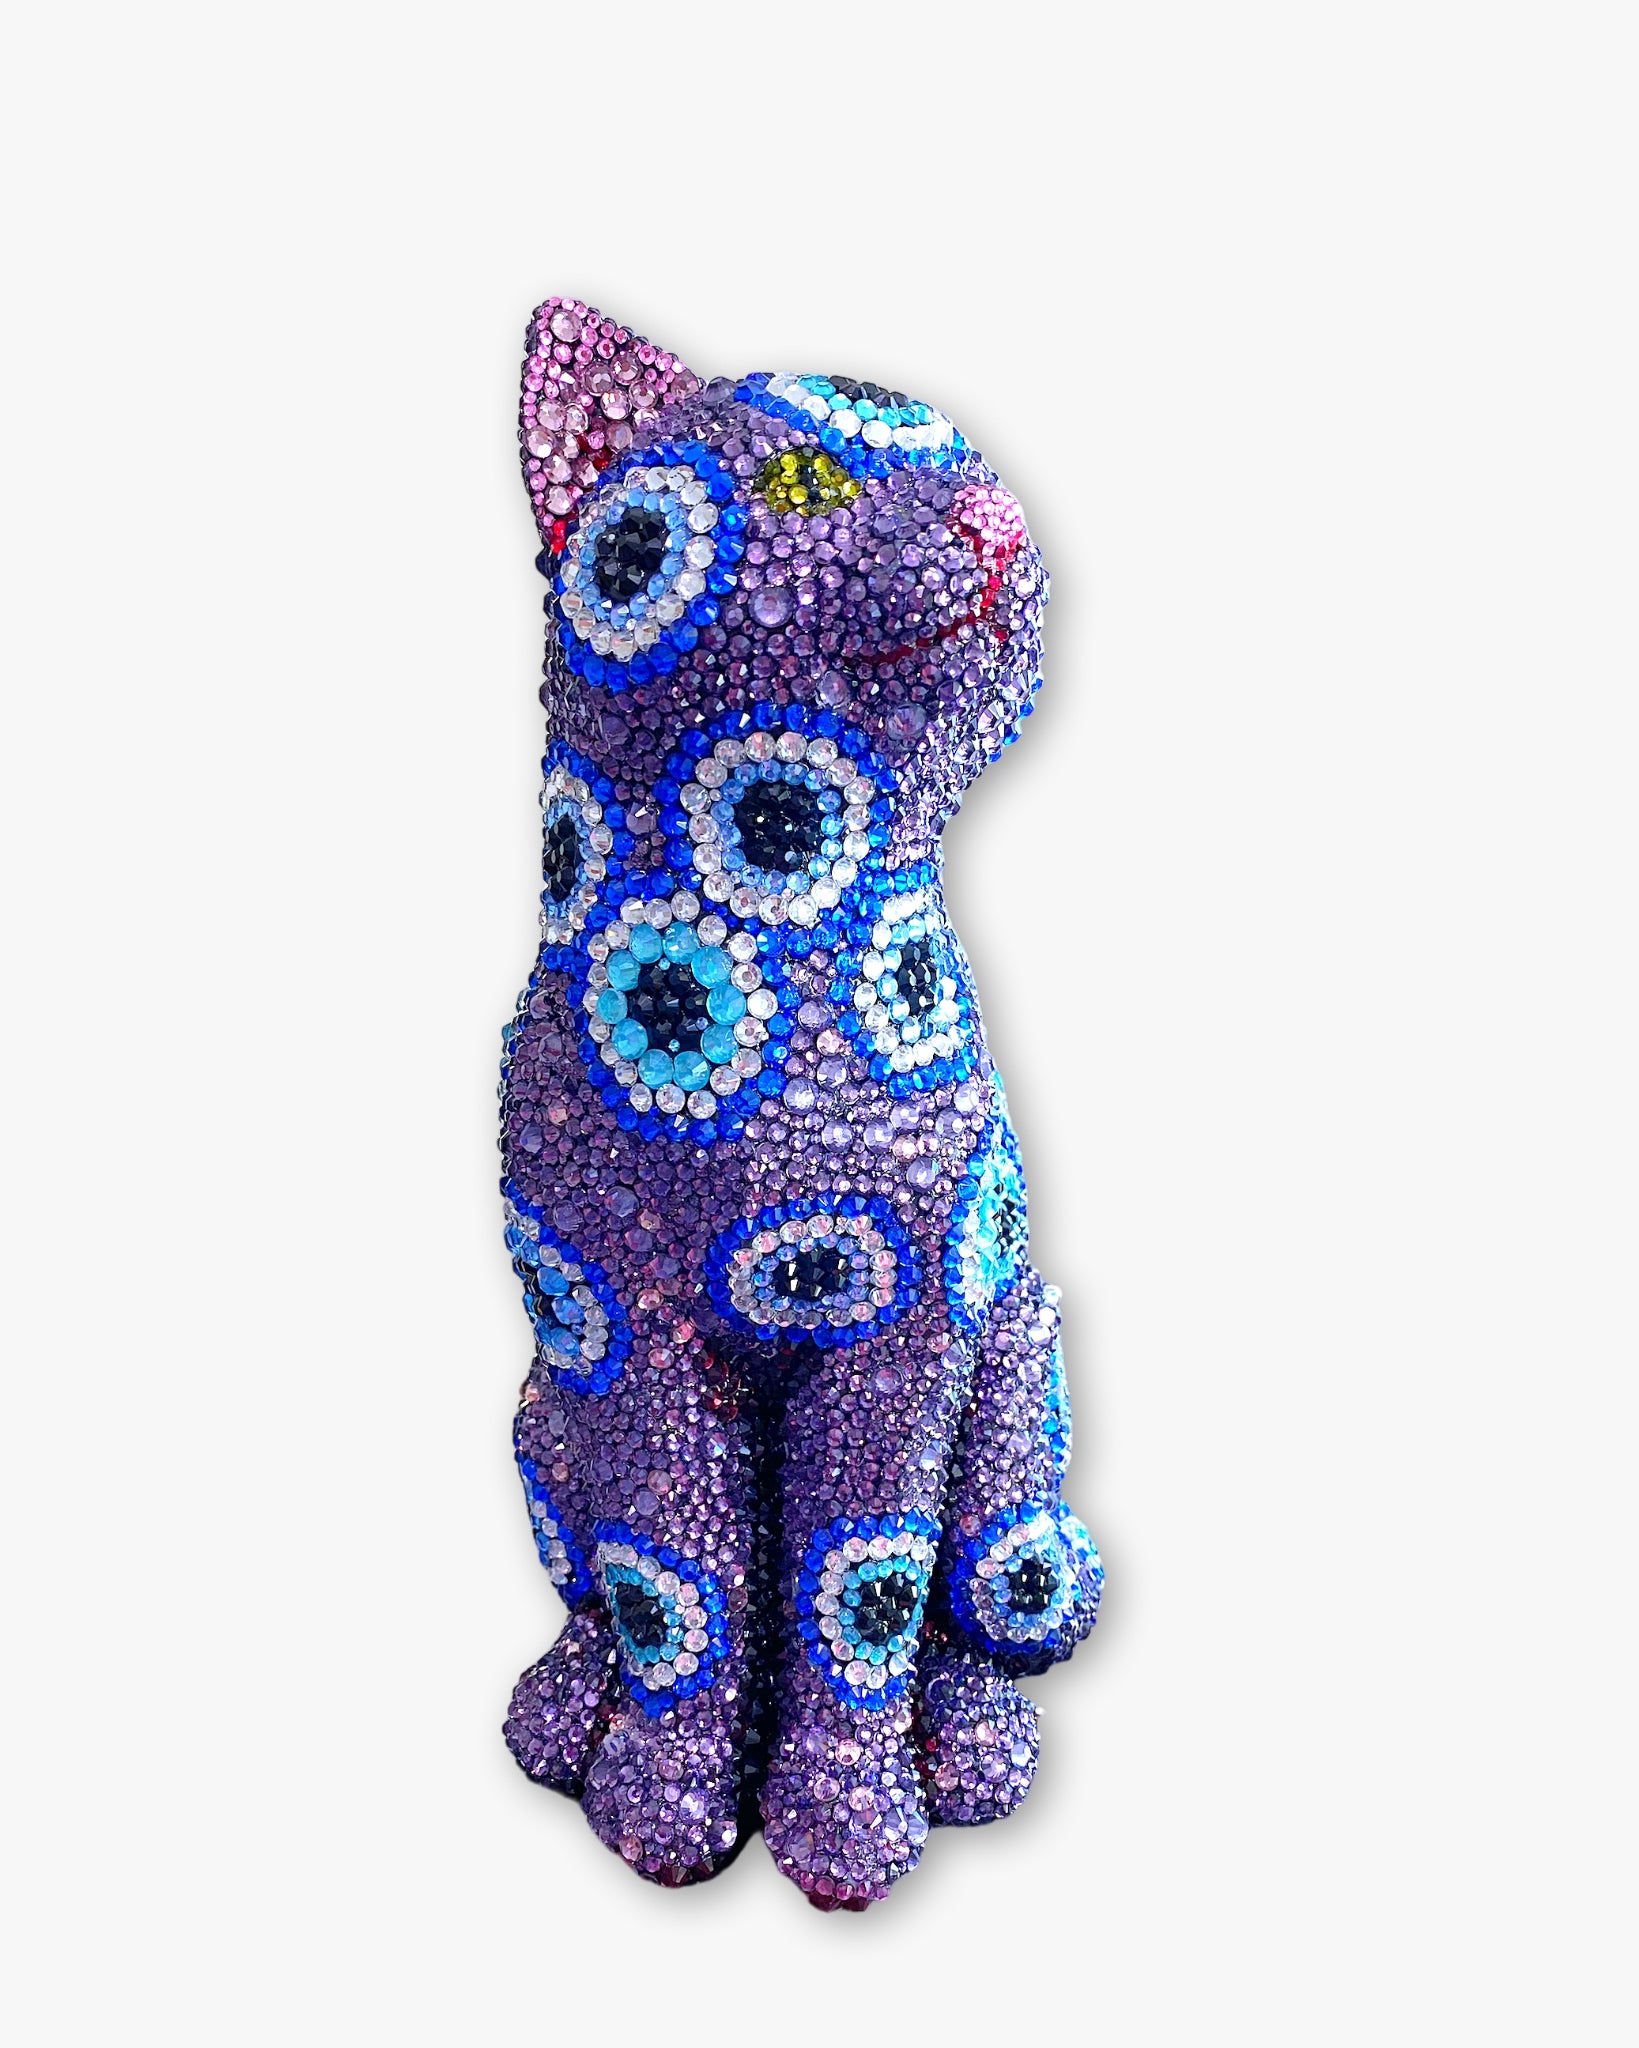 Amethyst Evil Eye Crystal Cat Sculpture - Heather Freitas - fine art home deccor